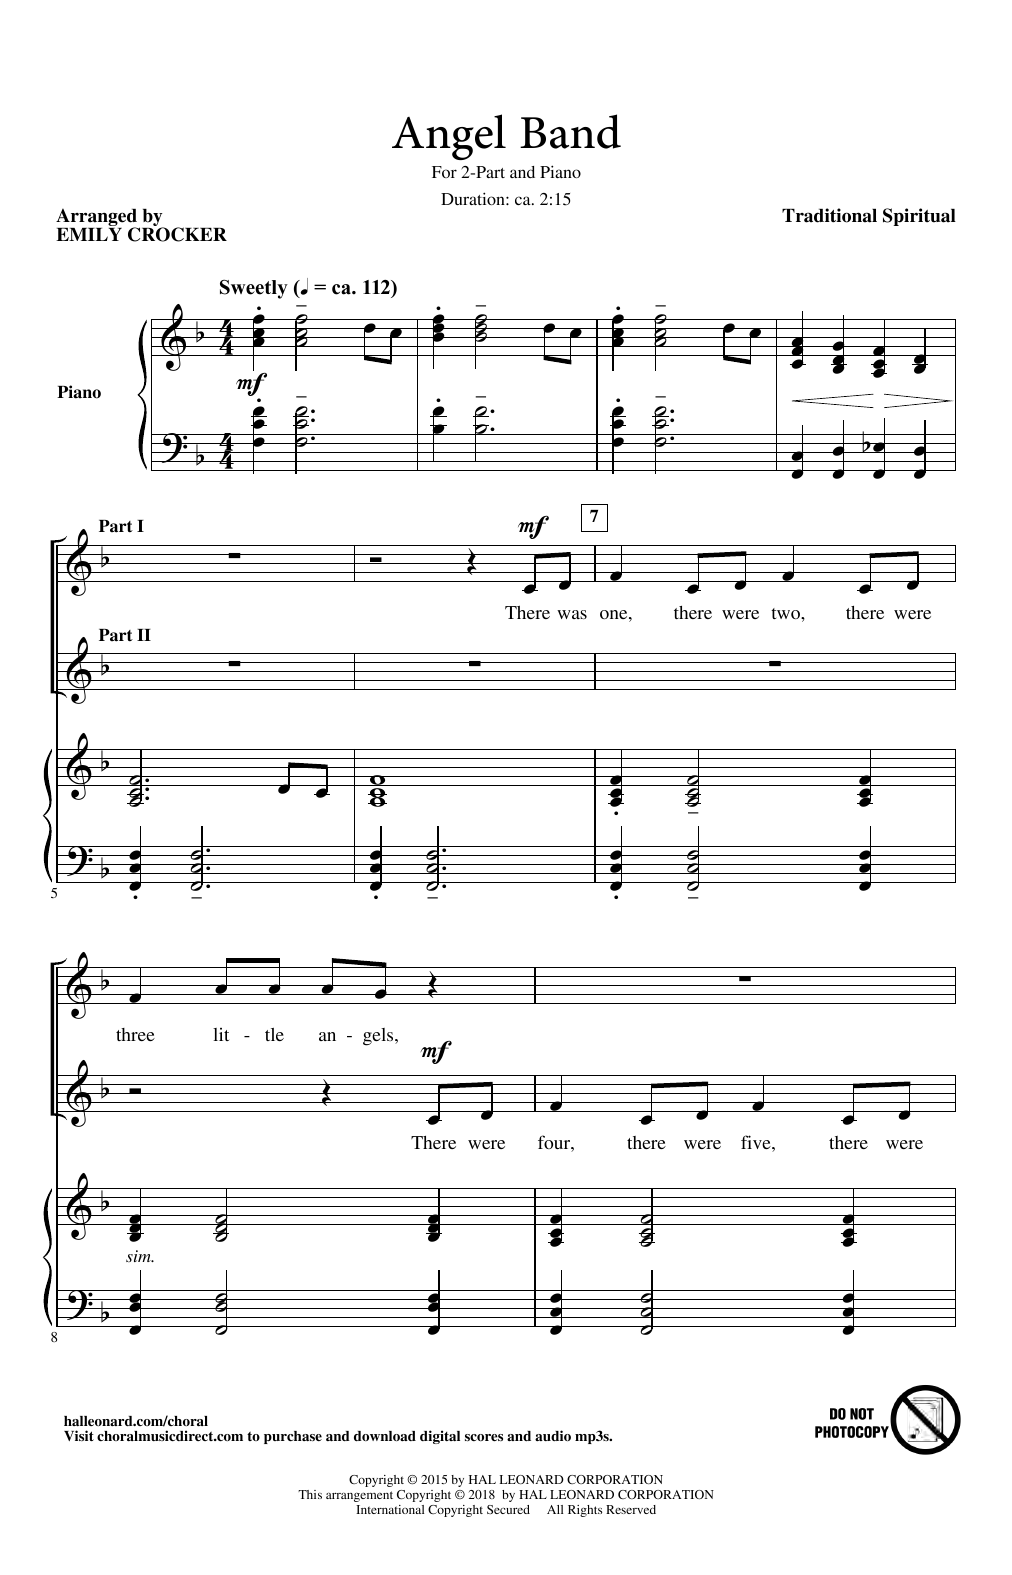 Emily Crocker Angel Band Sheet Music Notes & Chords for 2-Part Choir - Download or Print PDF